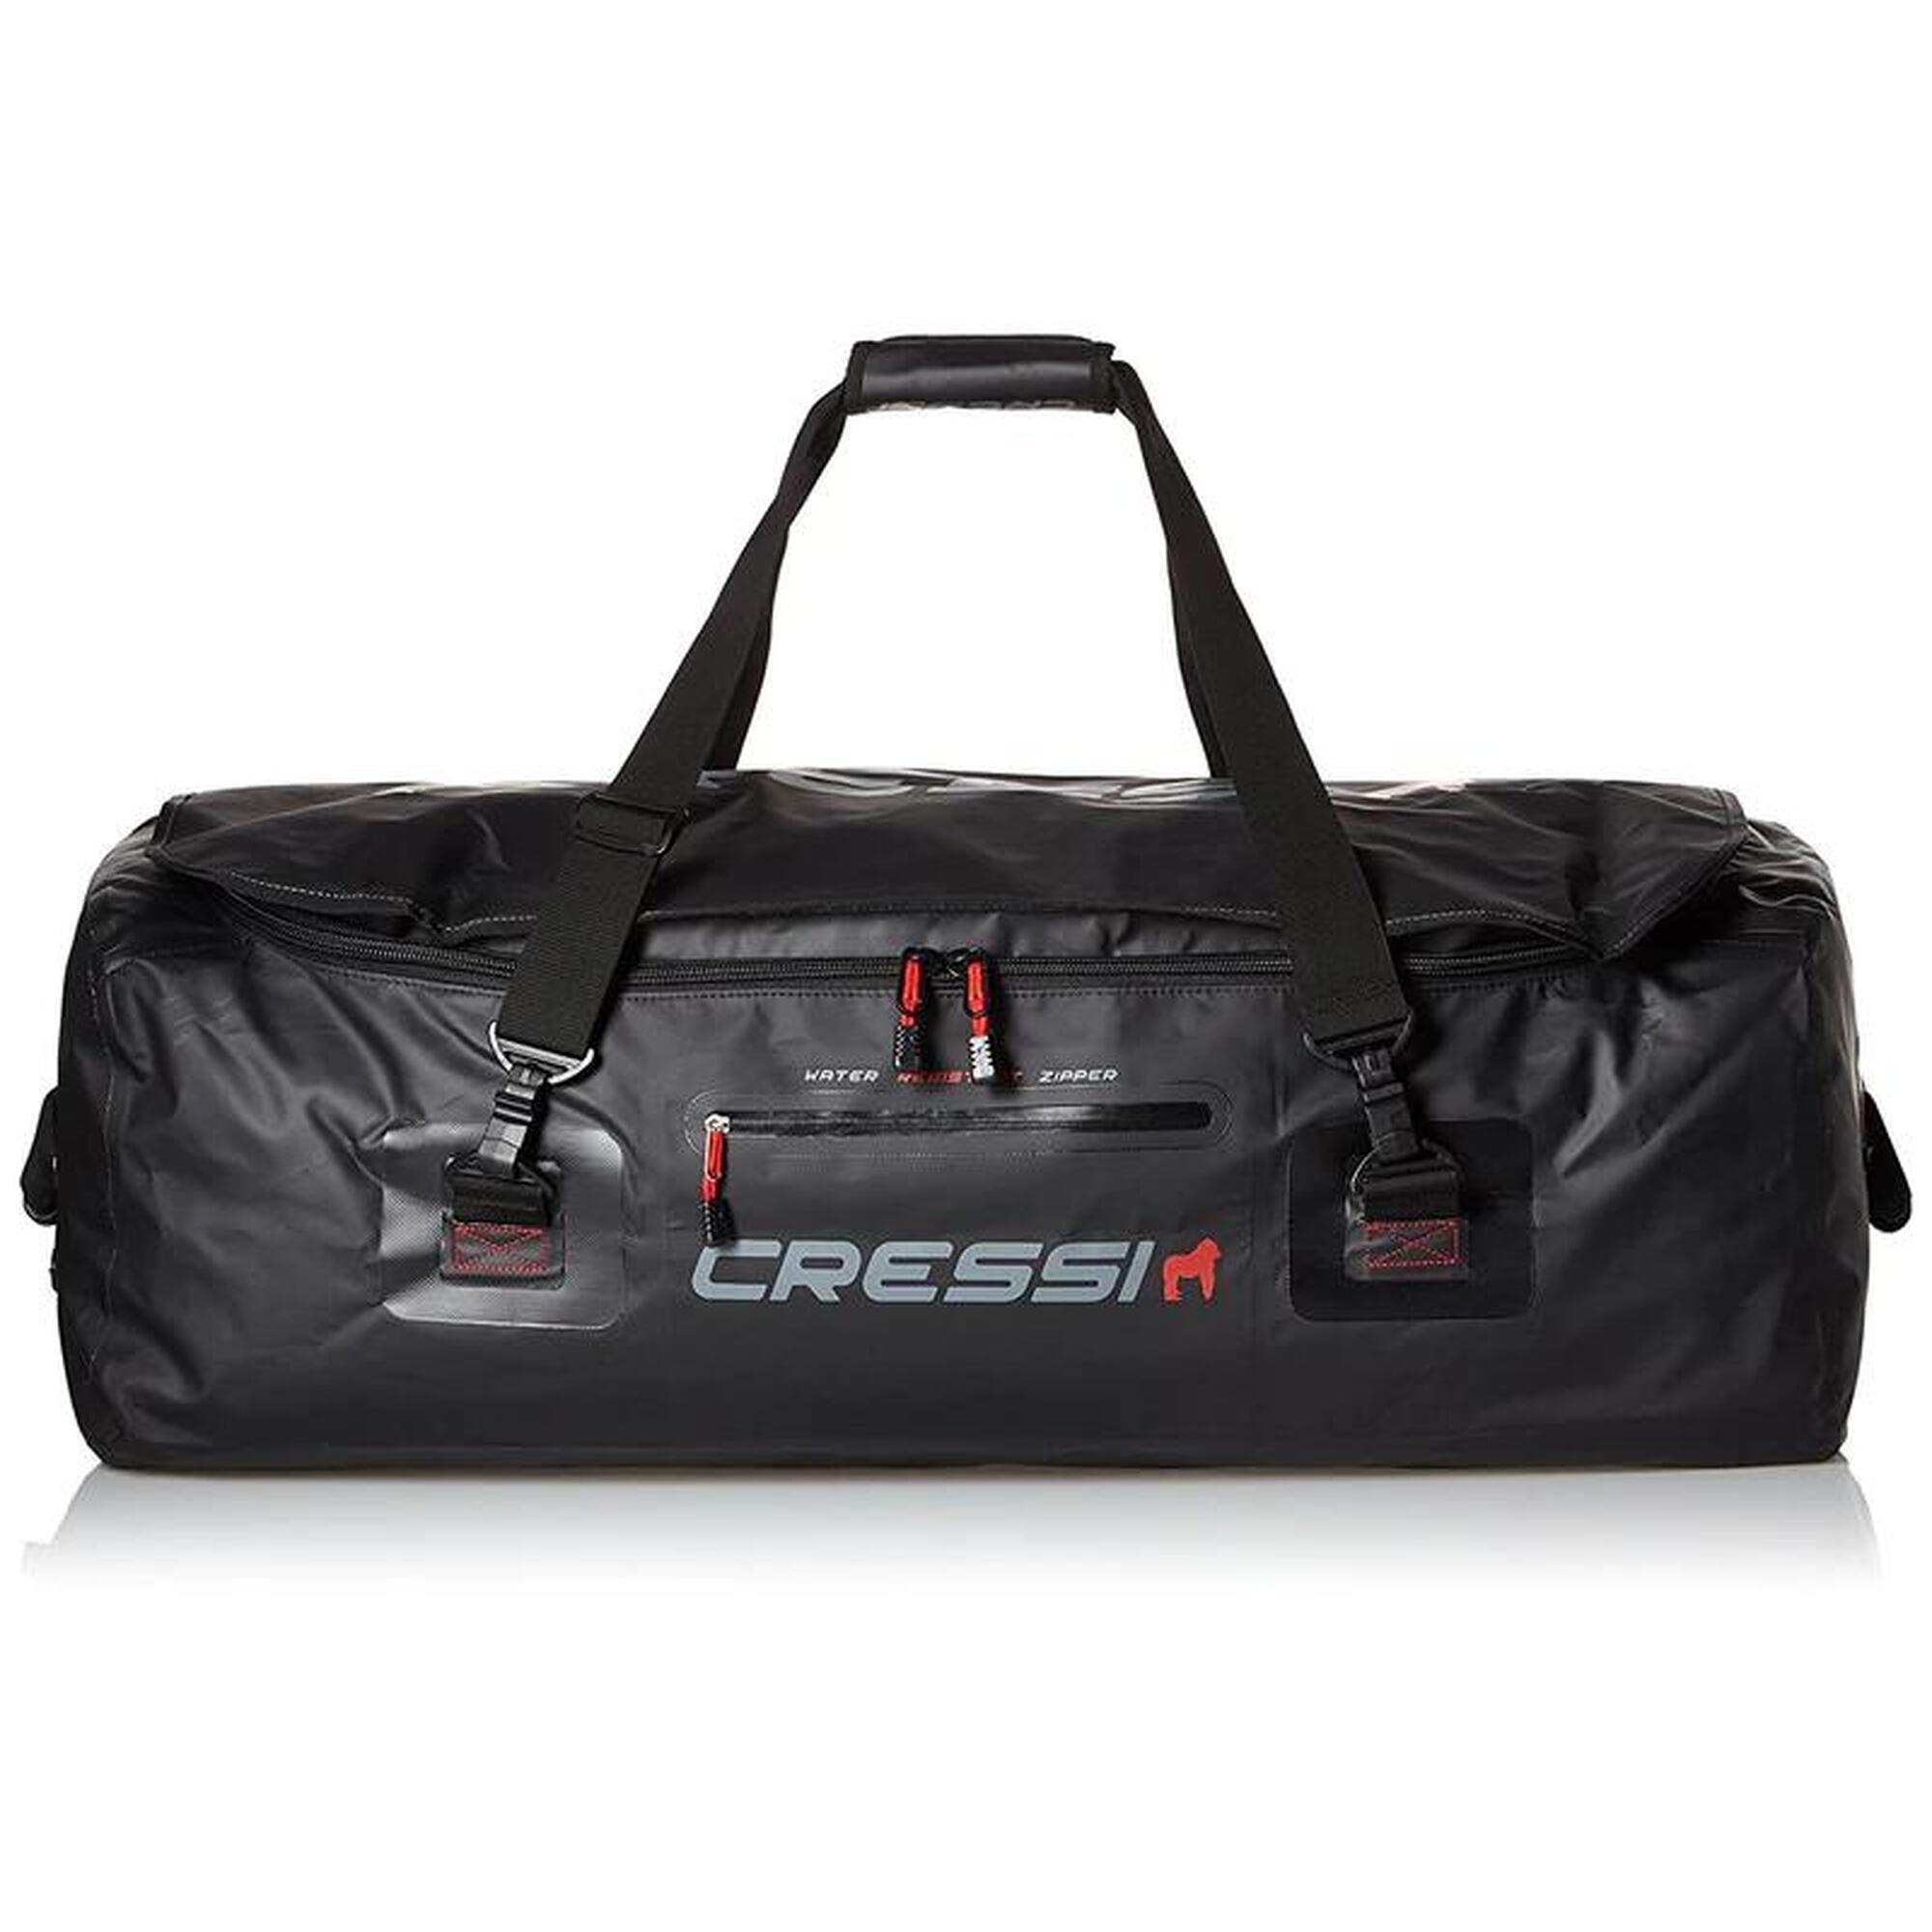 Gorilla Pro Bag Xl Size Dry Bag 135L - Black